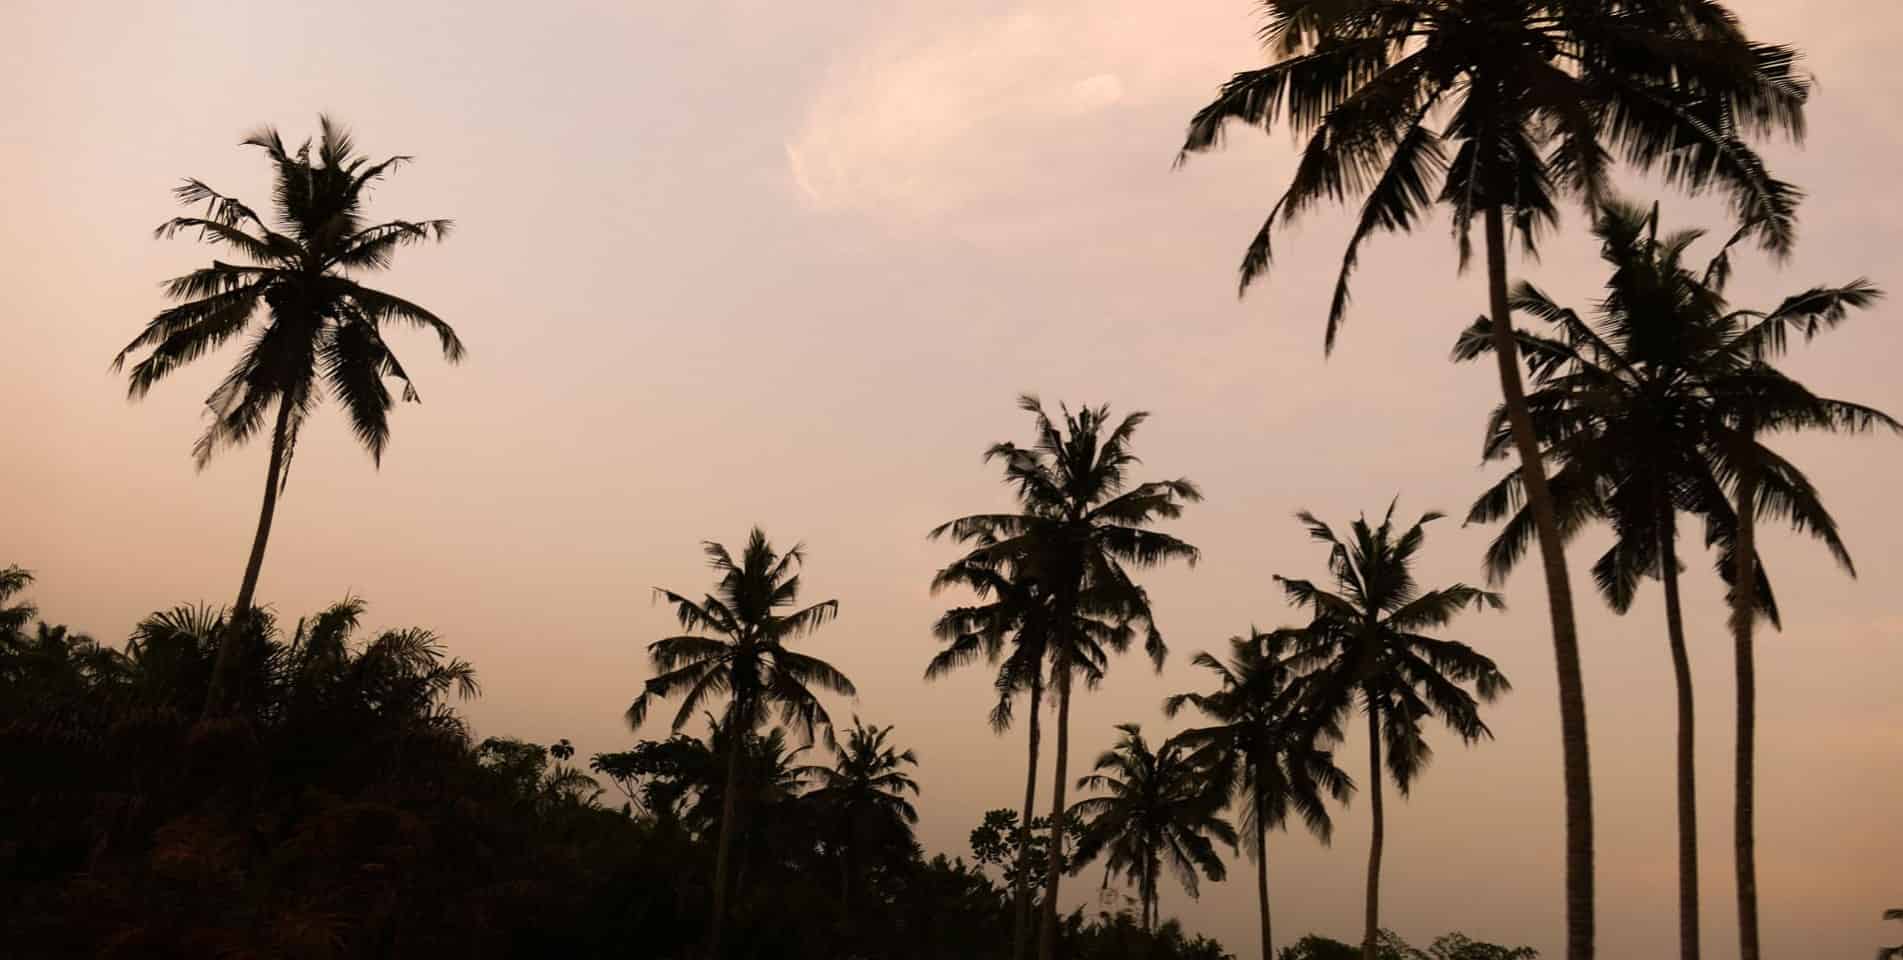 palmer under en lyserød himmel